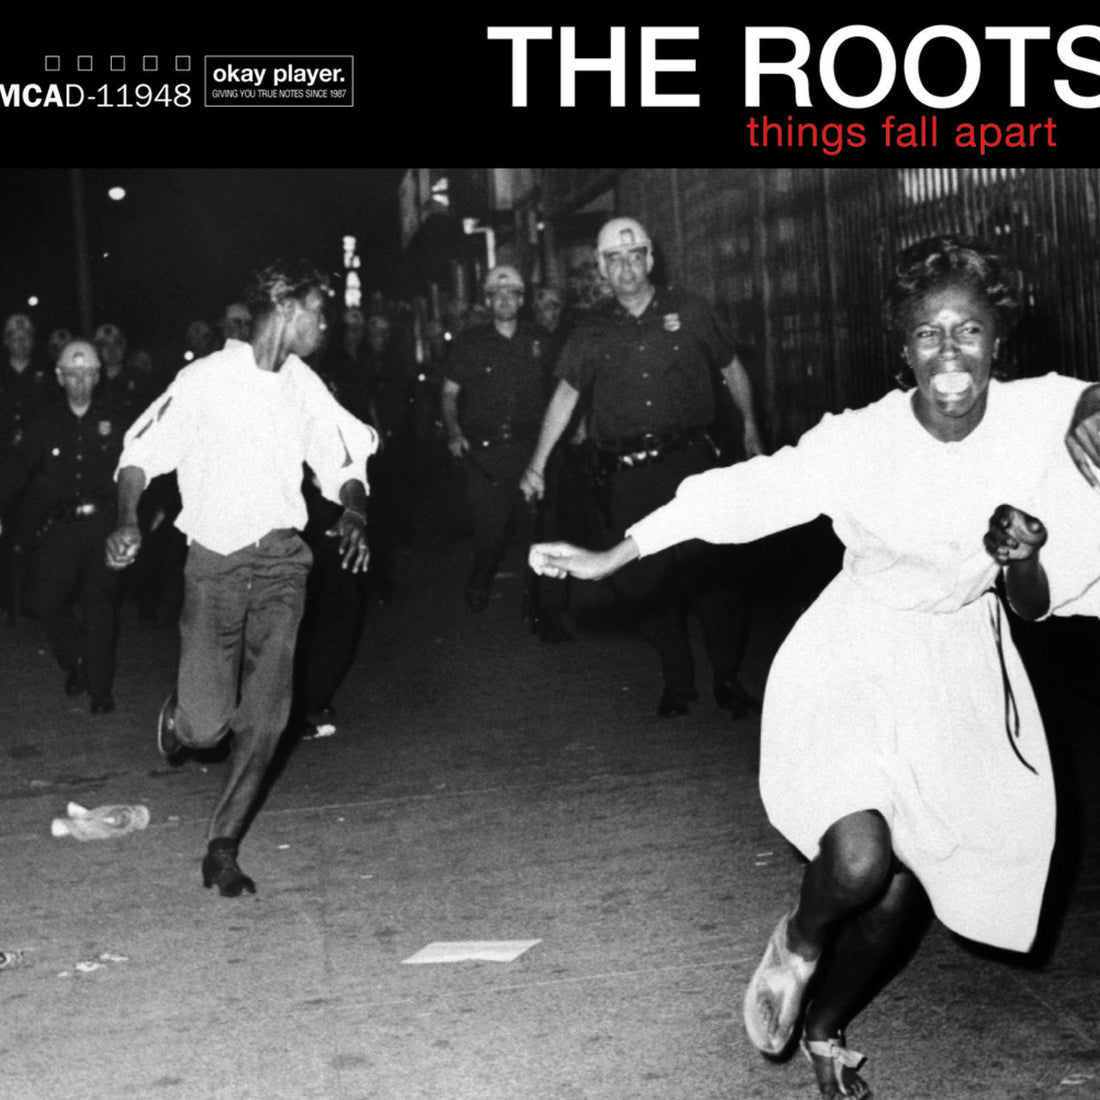 The Roots "Things Fall Apart" 2xLP 180 Gram Vinyl